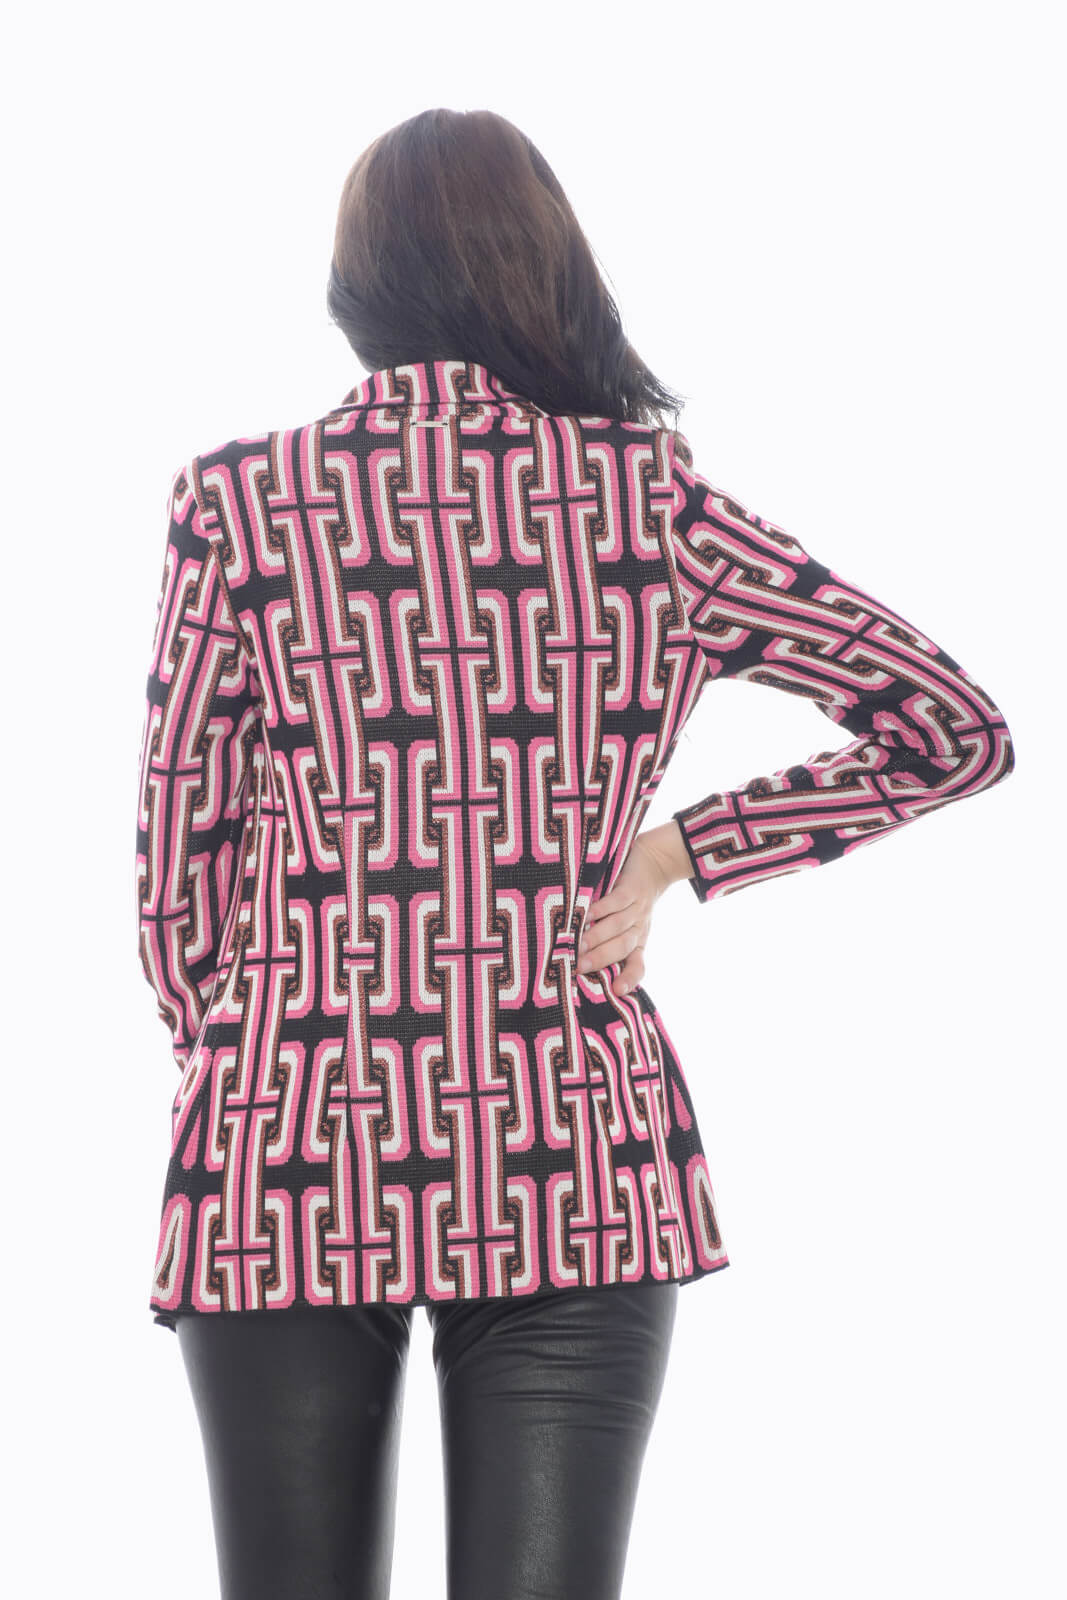 Liu Jo women's jacquard knit jacket